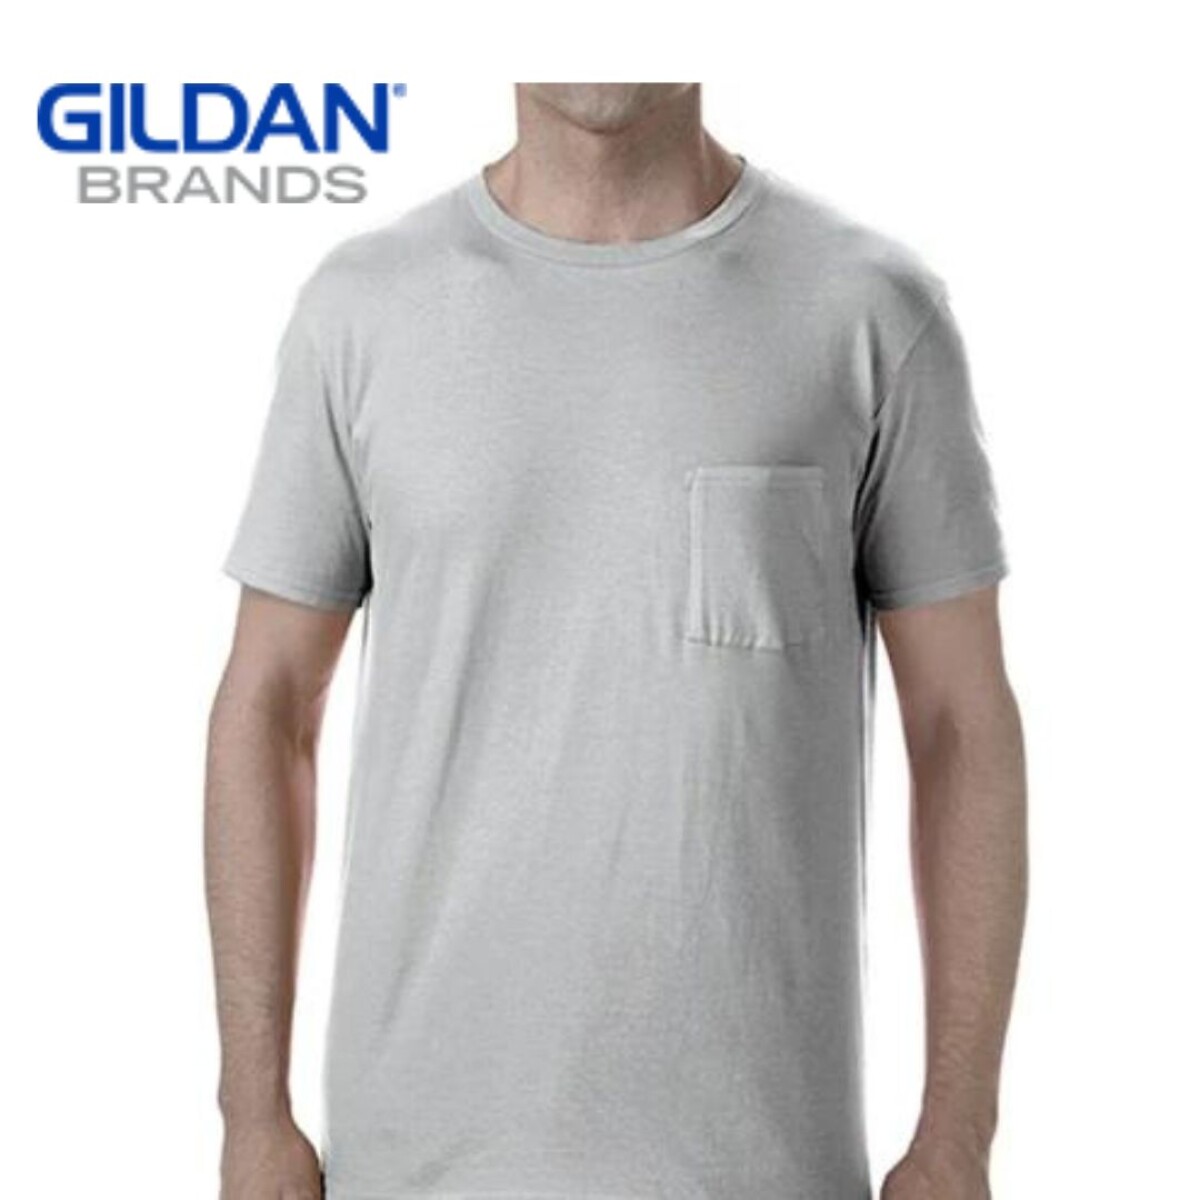 Camiseta Básica Gildan Con Bolsillo - Gris melange 